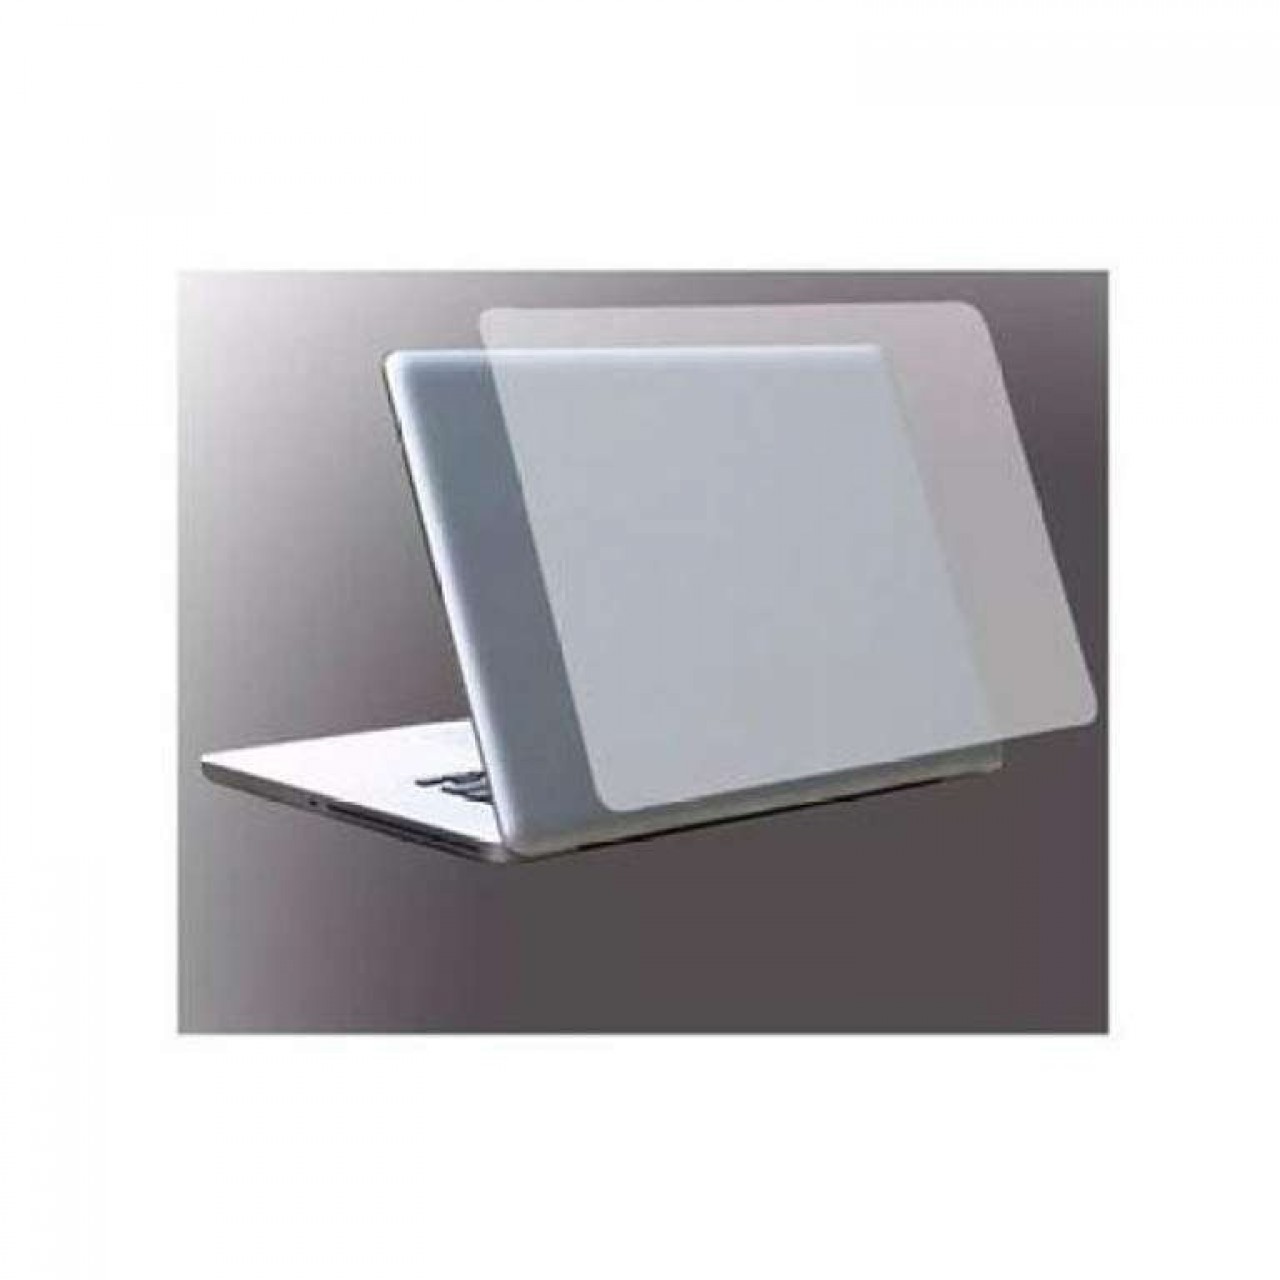 Macbook Laptop Back Protector Sheet